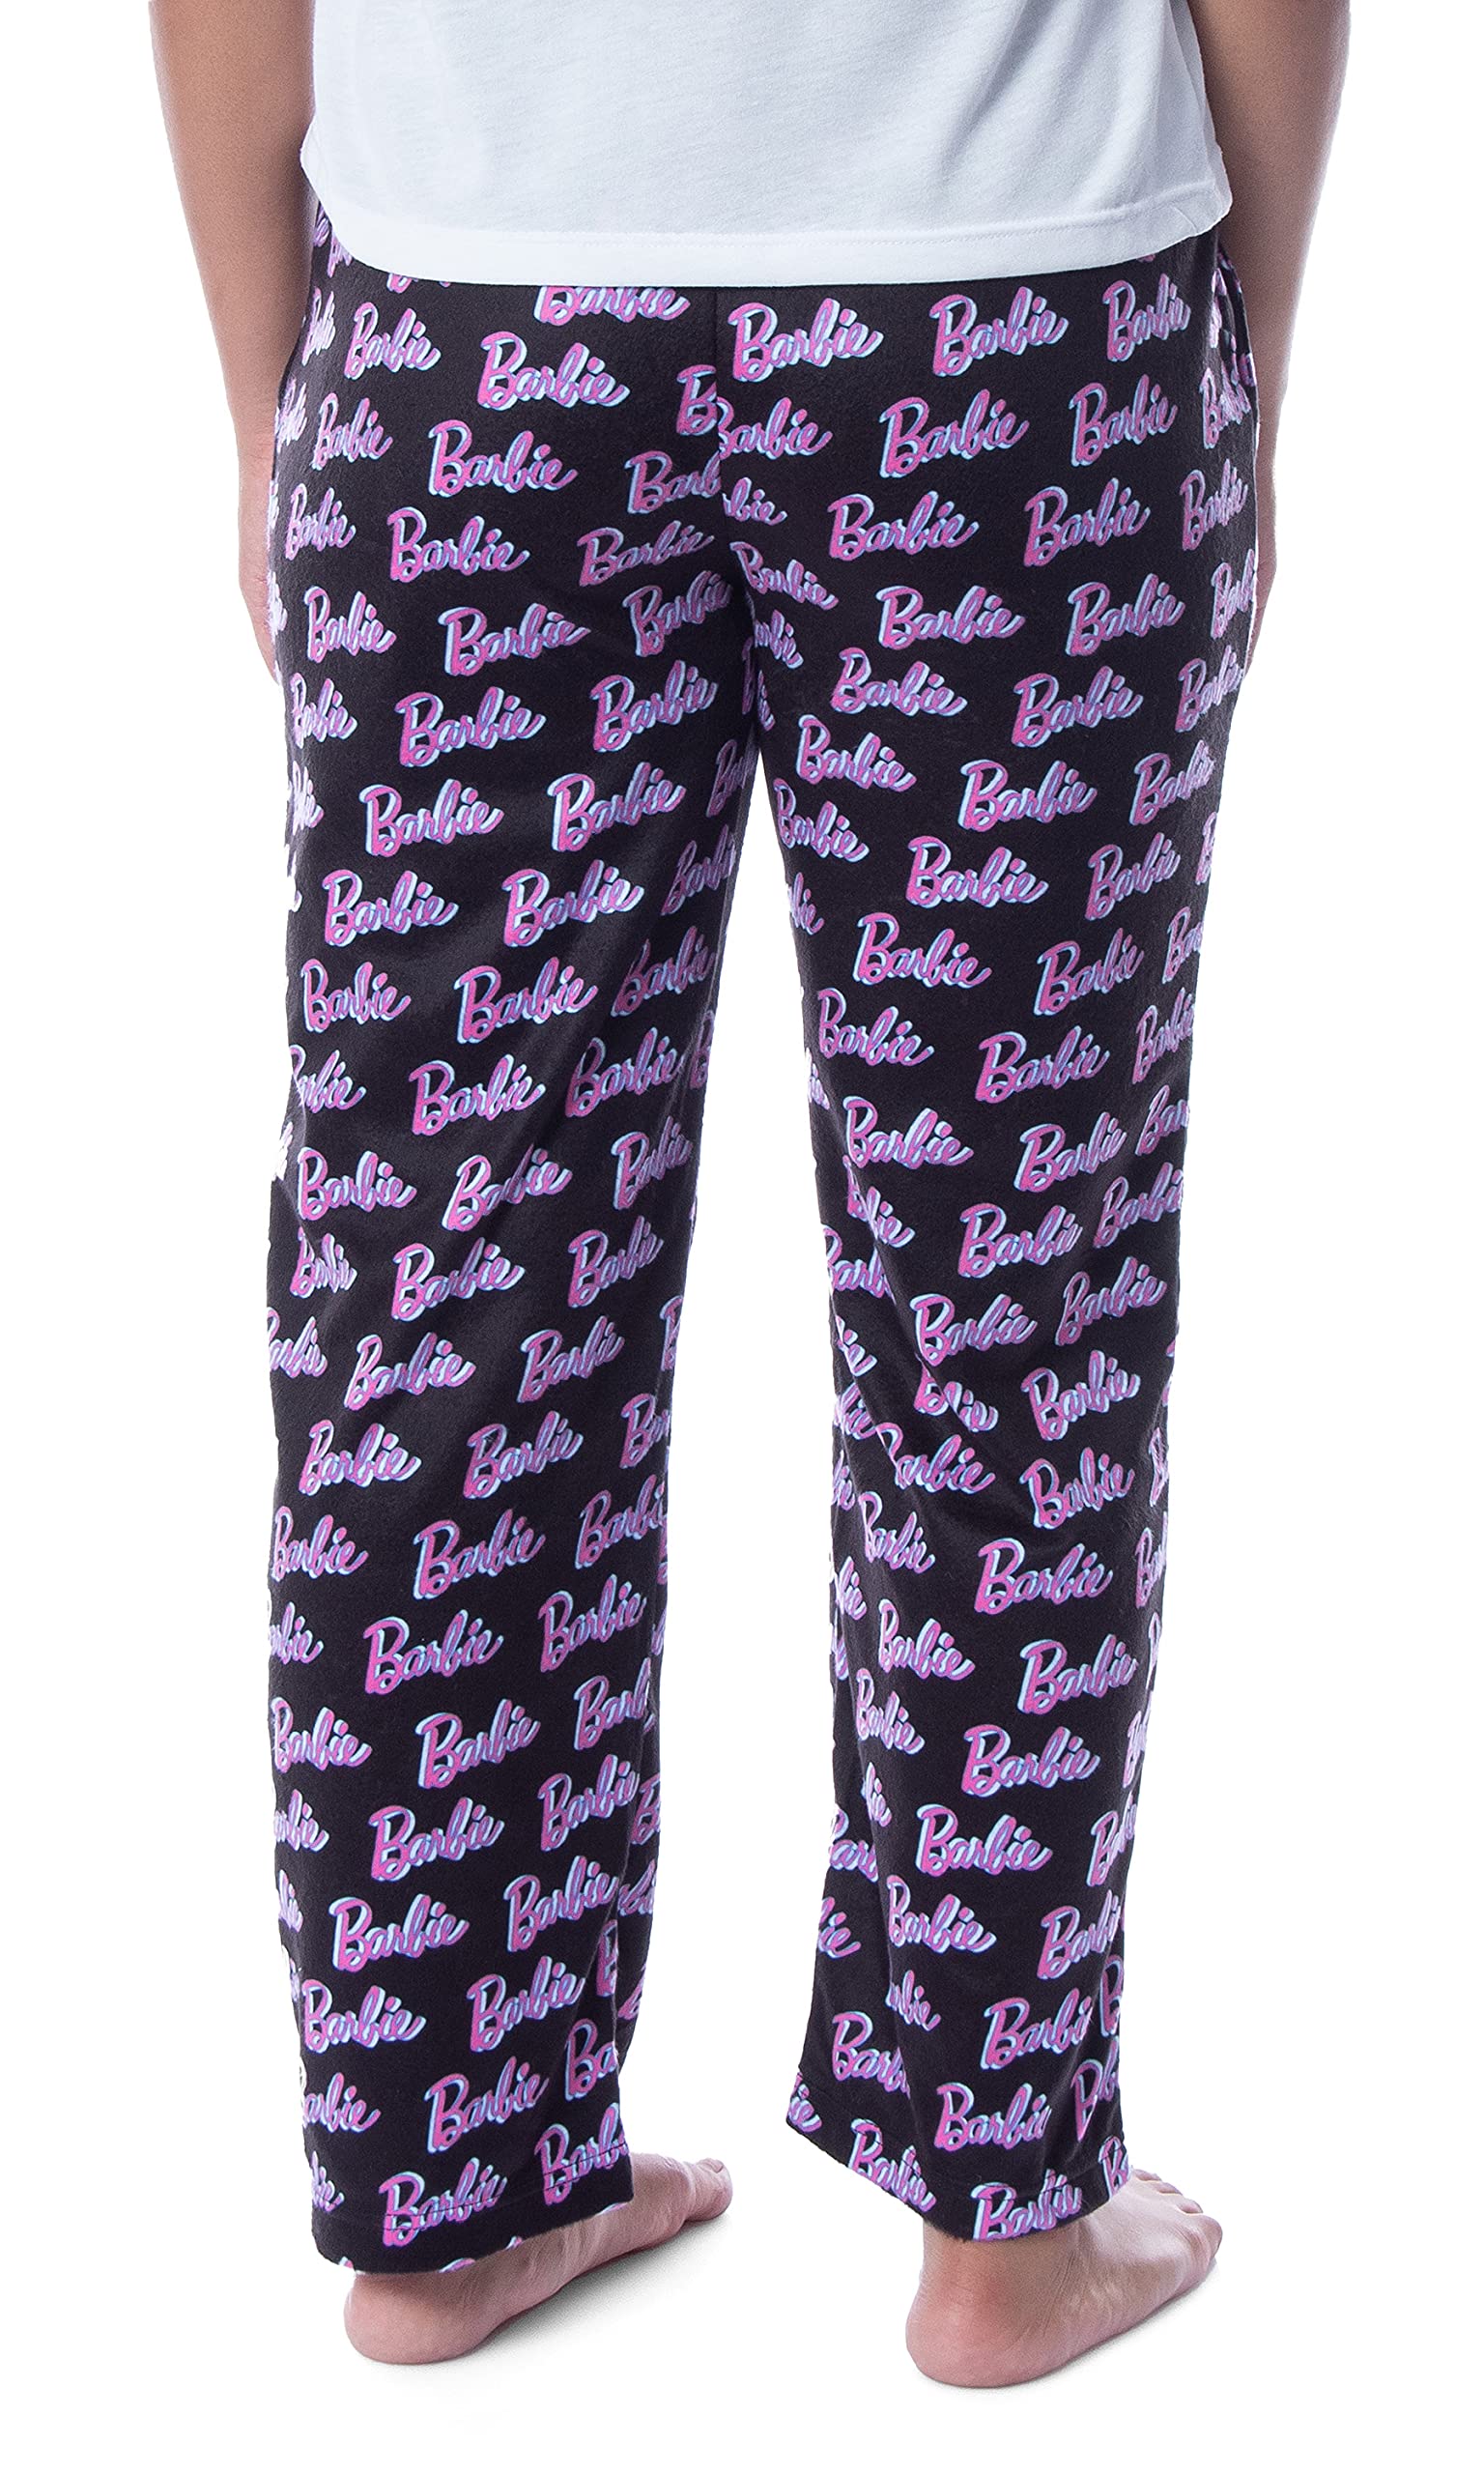 Mattel Womens' Barbie Logo All Over Print Loungewear Sleep Pajama Pants (M)